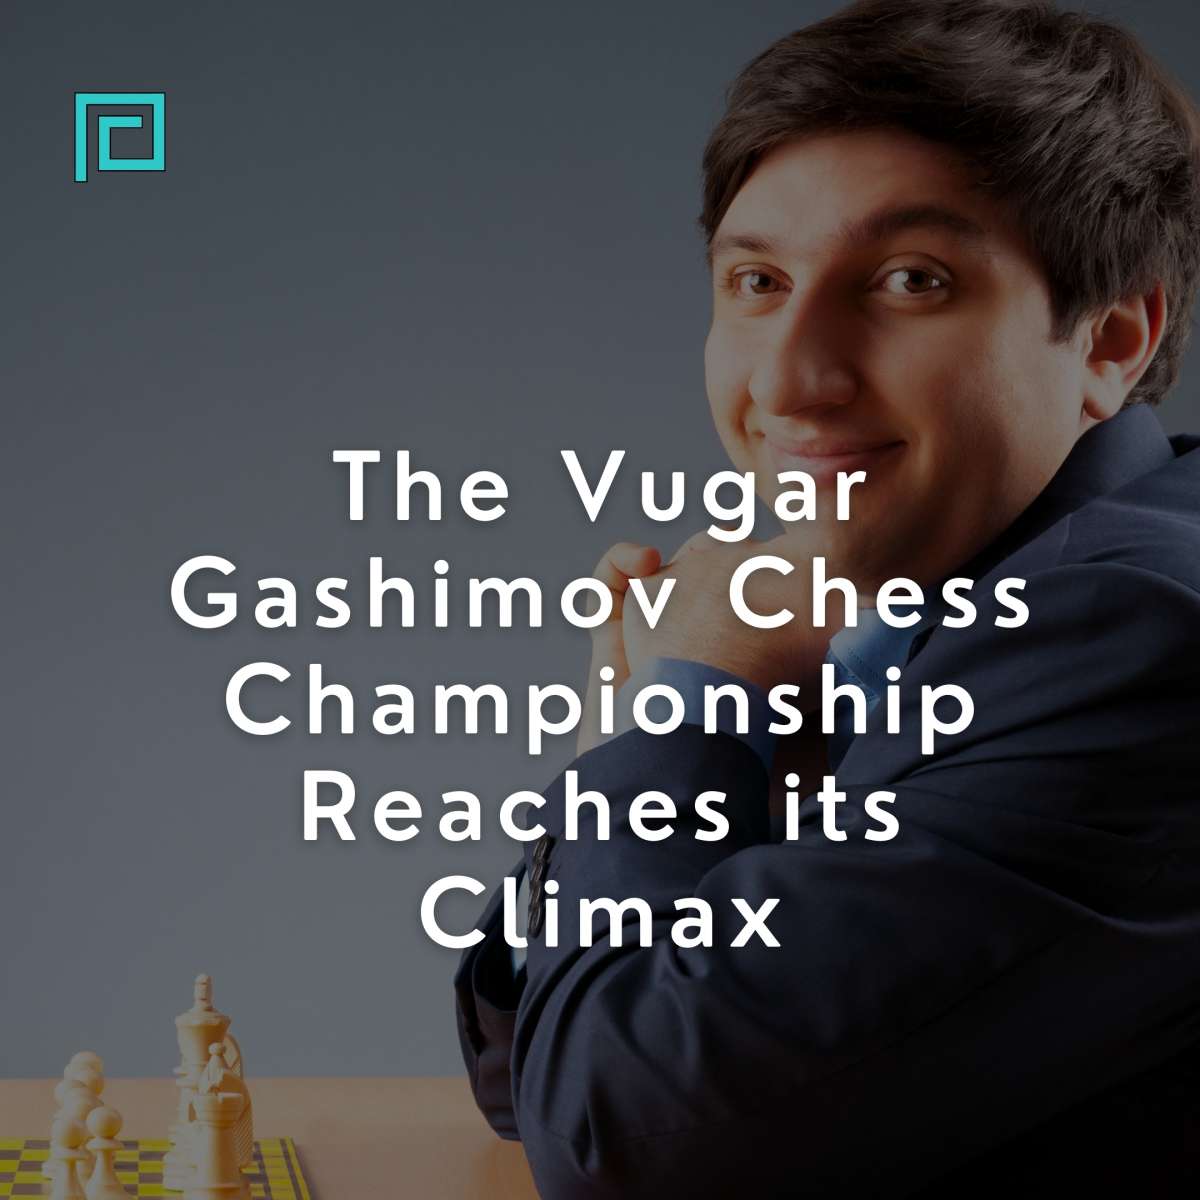 The Vugar Gashimov Chess Championship Reaches its Climax